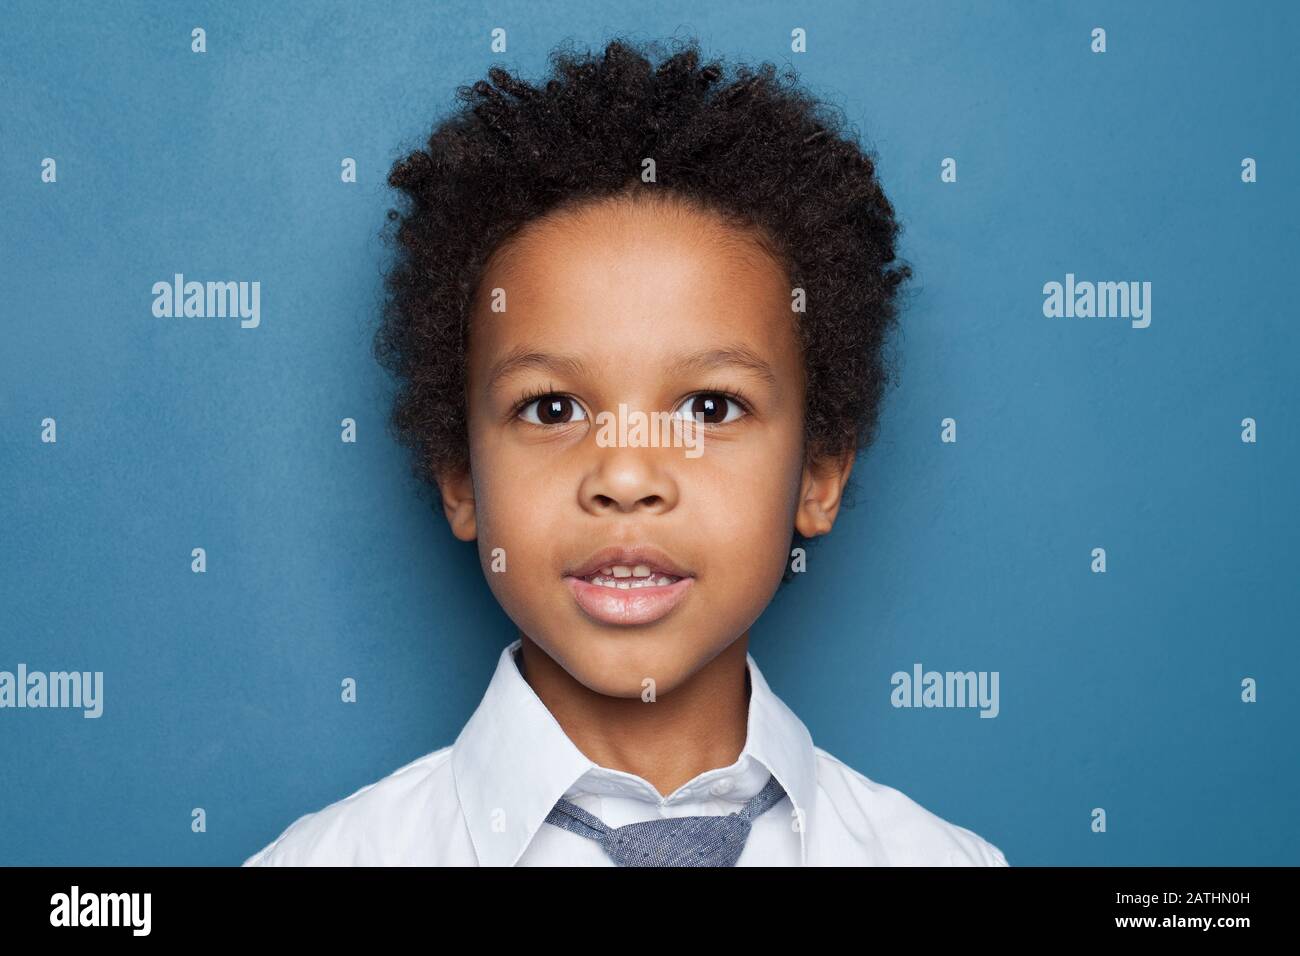 Little black kid boy student on blue background close up portrait Stock Photo